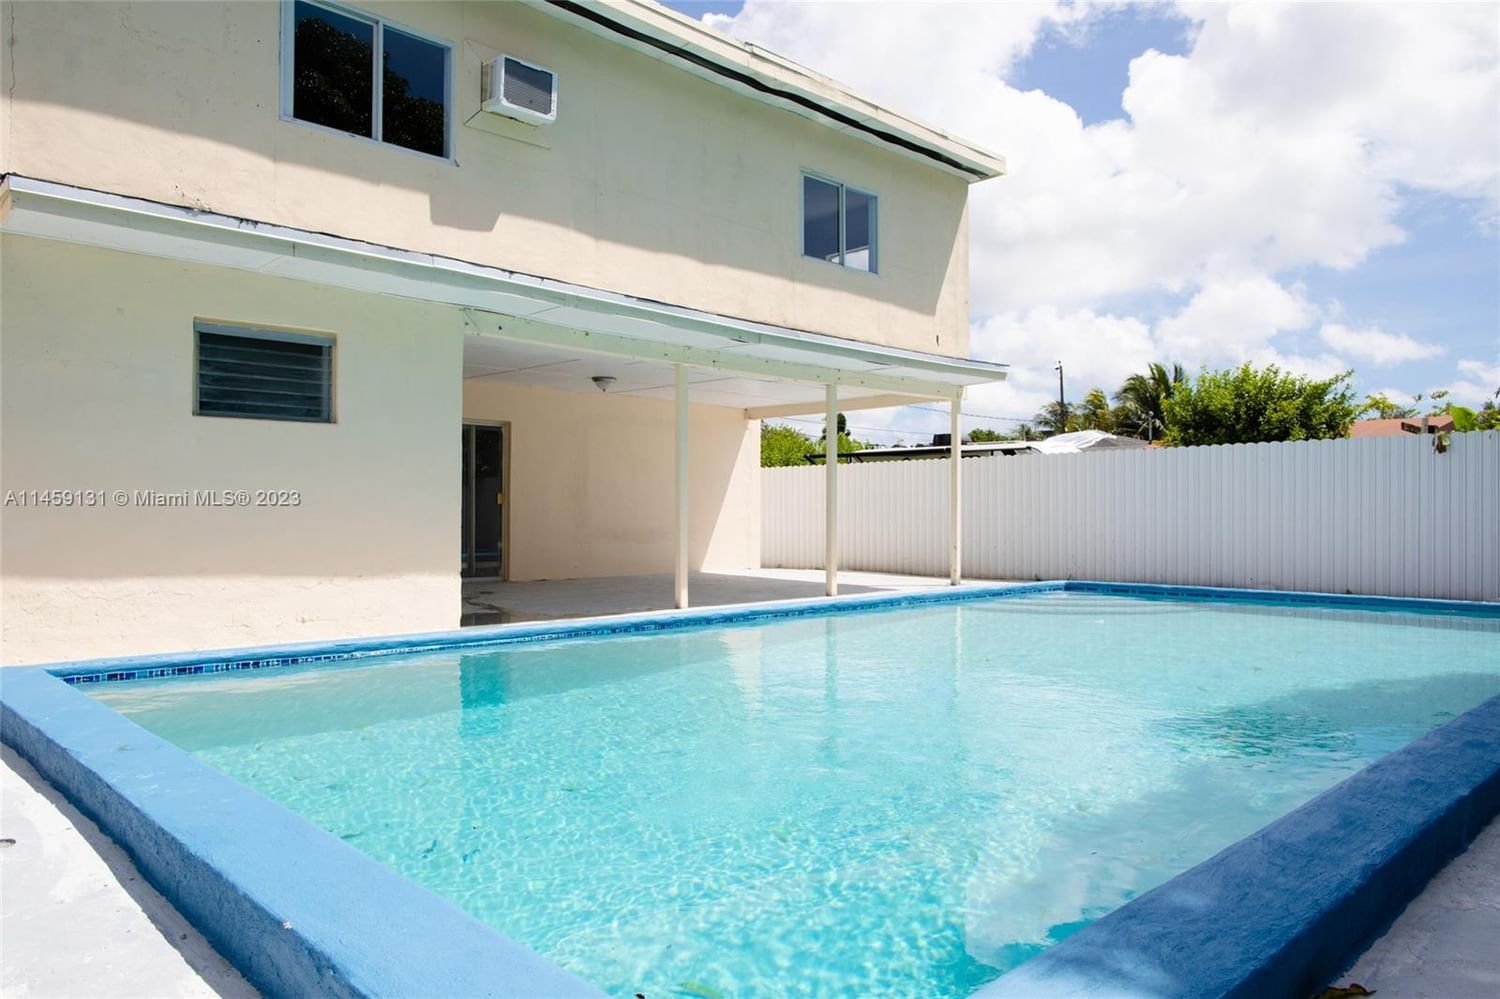 Real estate property located at 3240 16th Ter, Miami-Dade County, Miami, FL